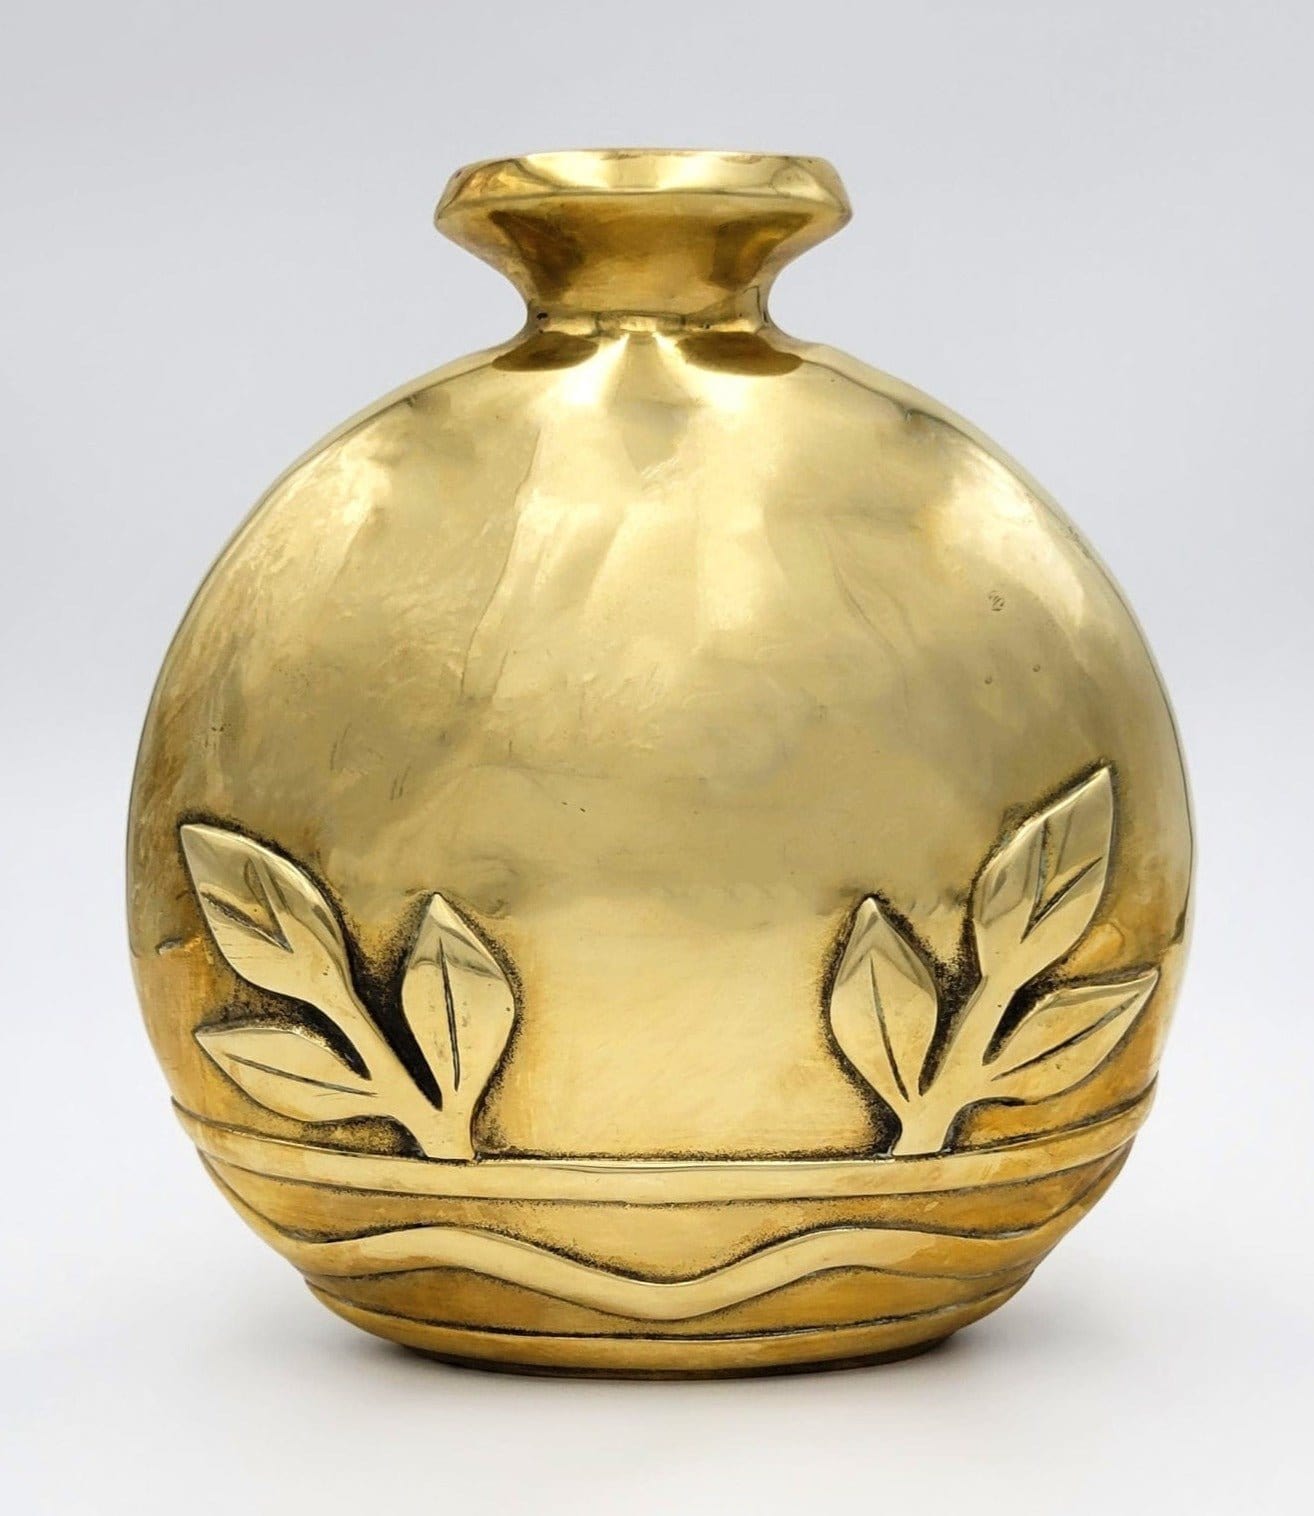 Dolbi Cashier Vases Stunning LARGE Dolbi Cashier Art Deco Brass Vase with Raised Floral Motif 1980